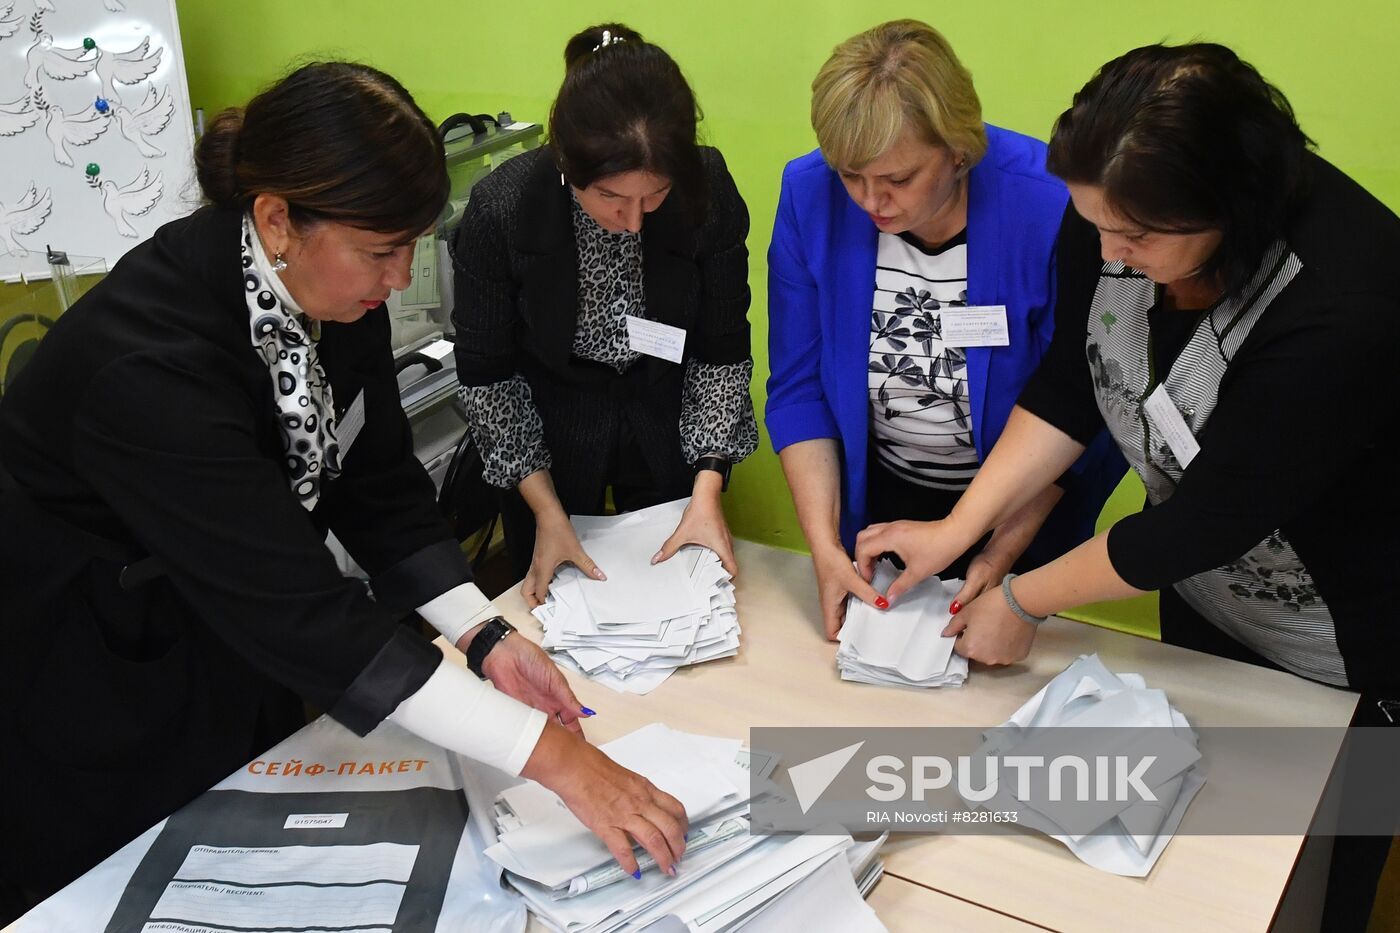 DPR LPR Russia Joining Referendum